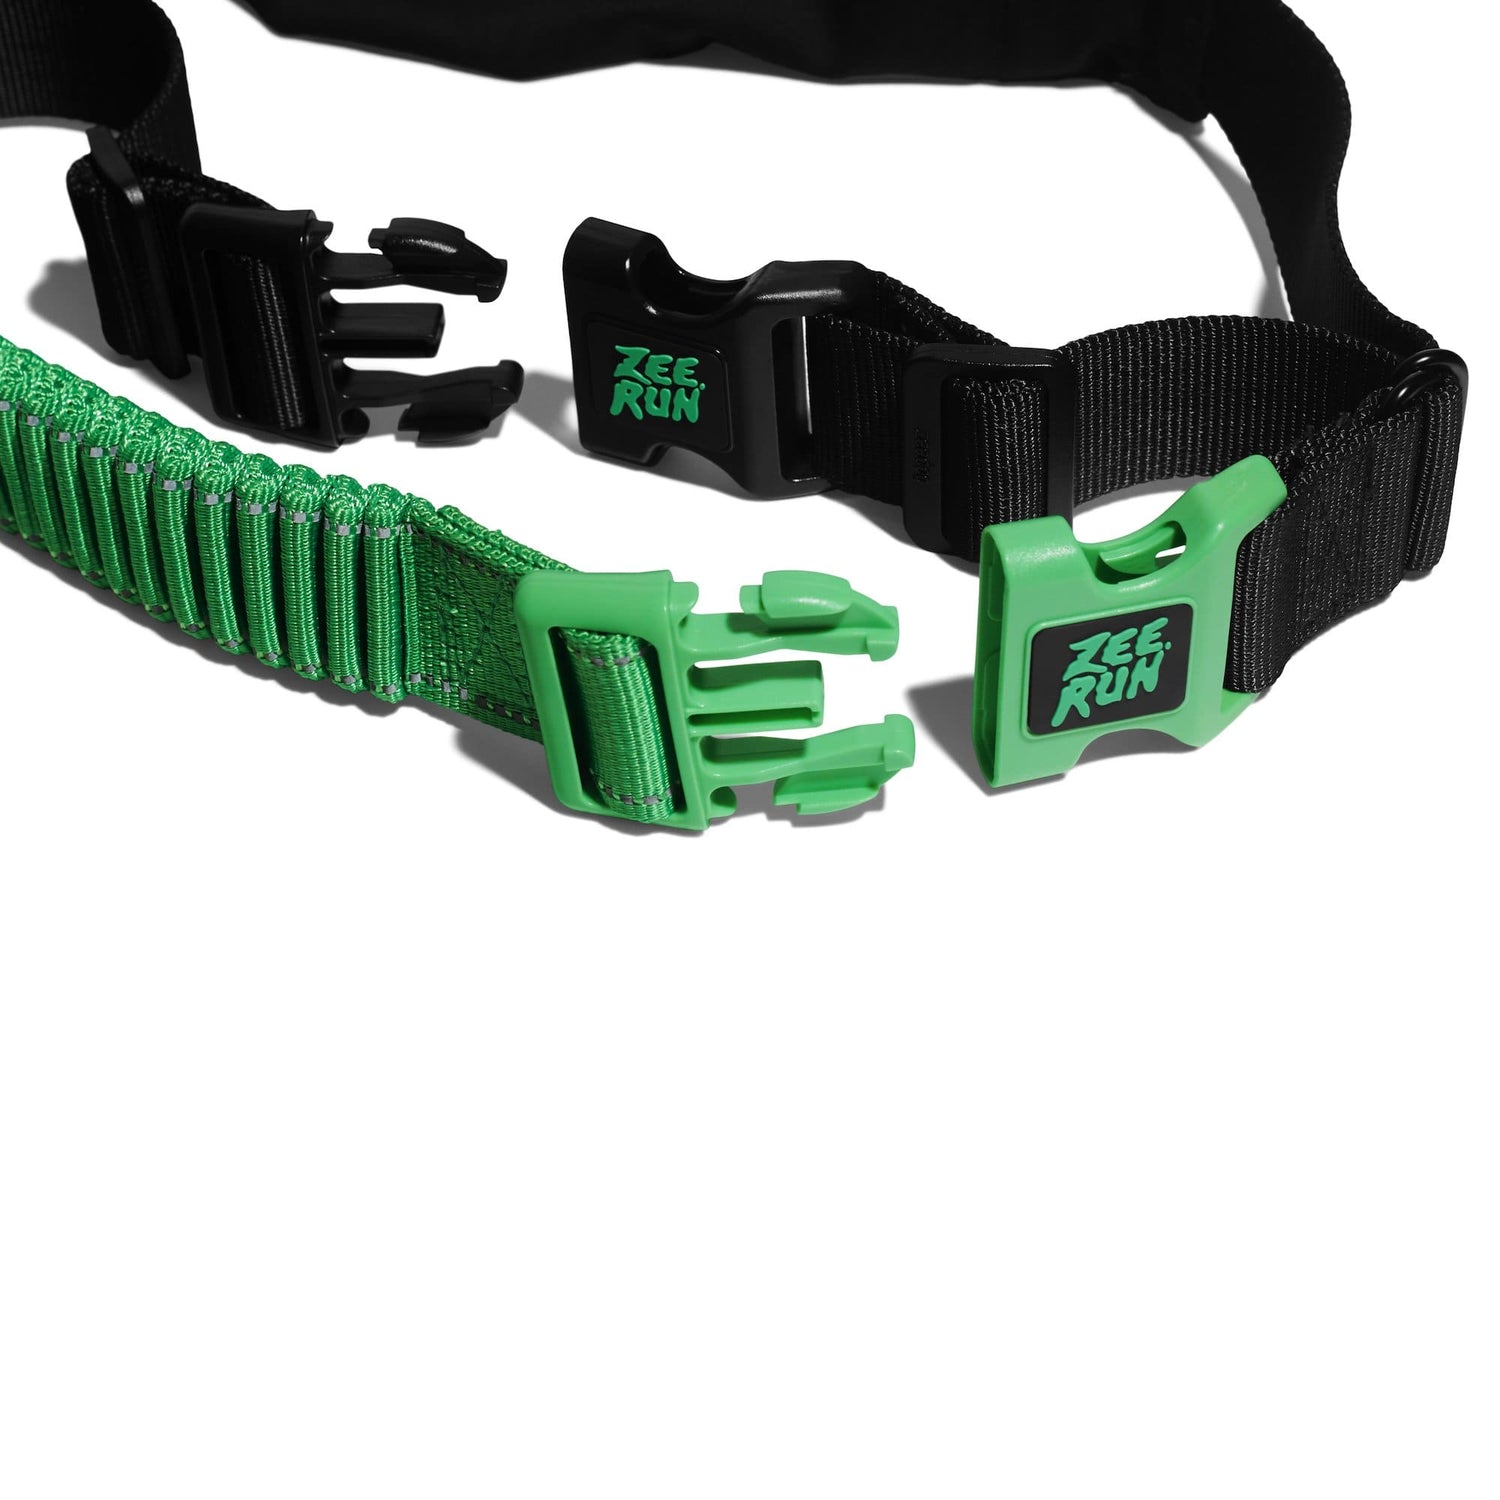 ZeeDog Fashion Accesories Cinturon para correr ZEE.RUN